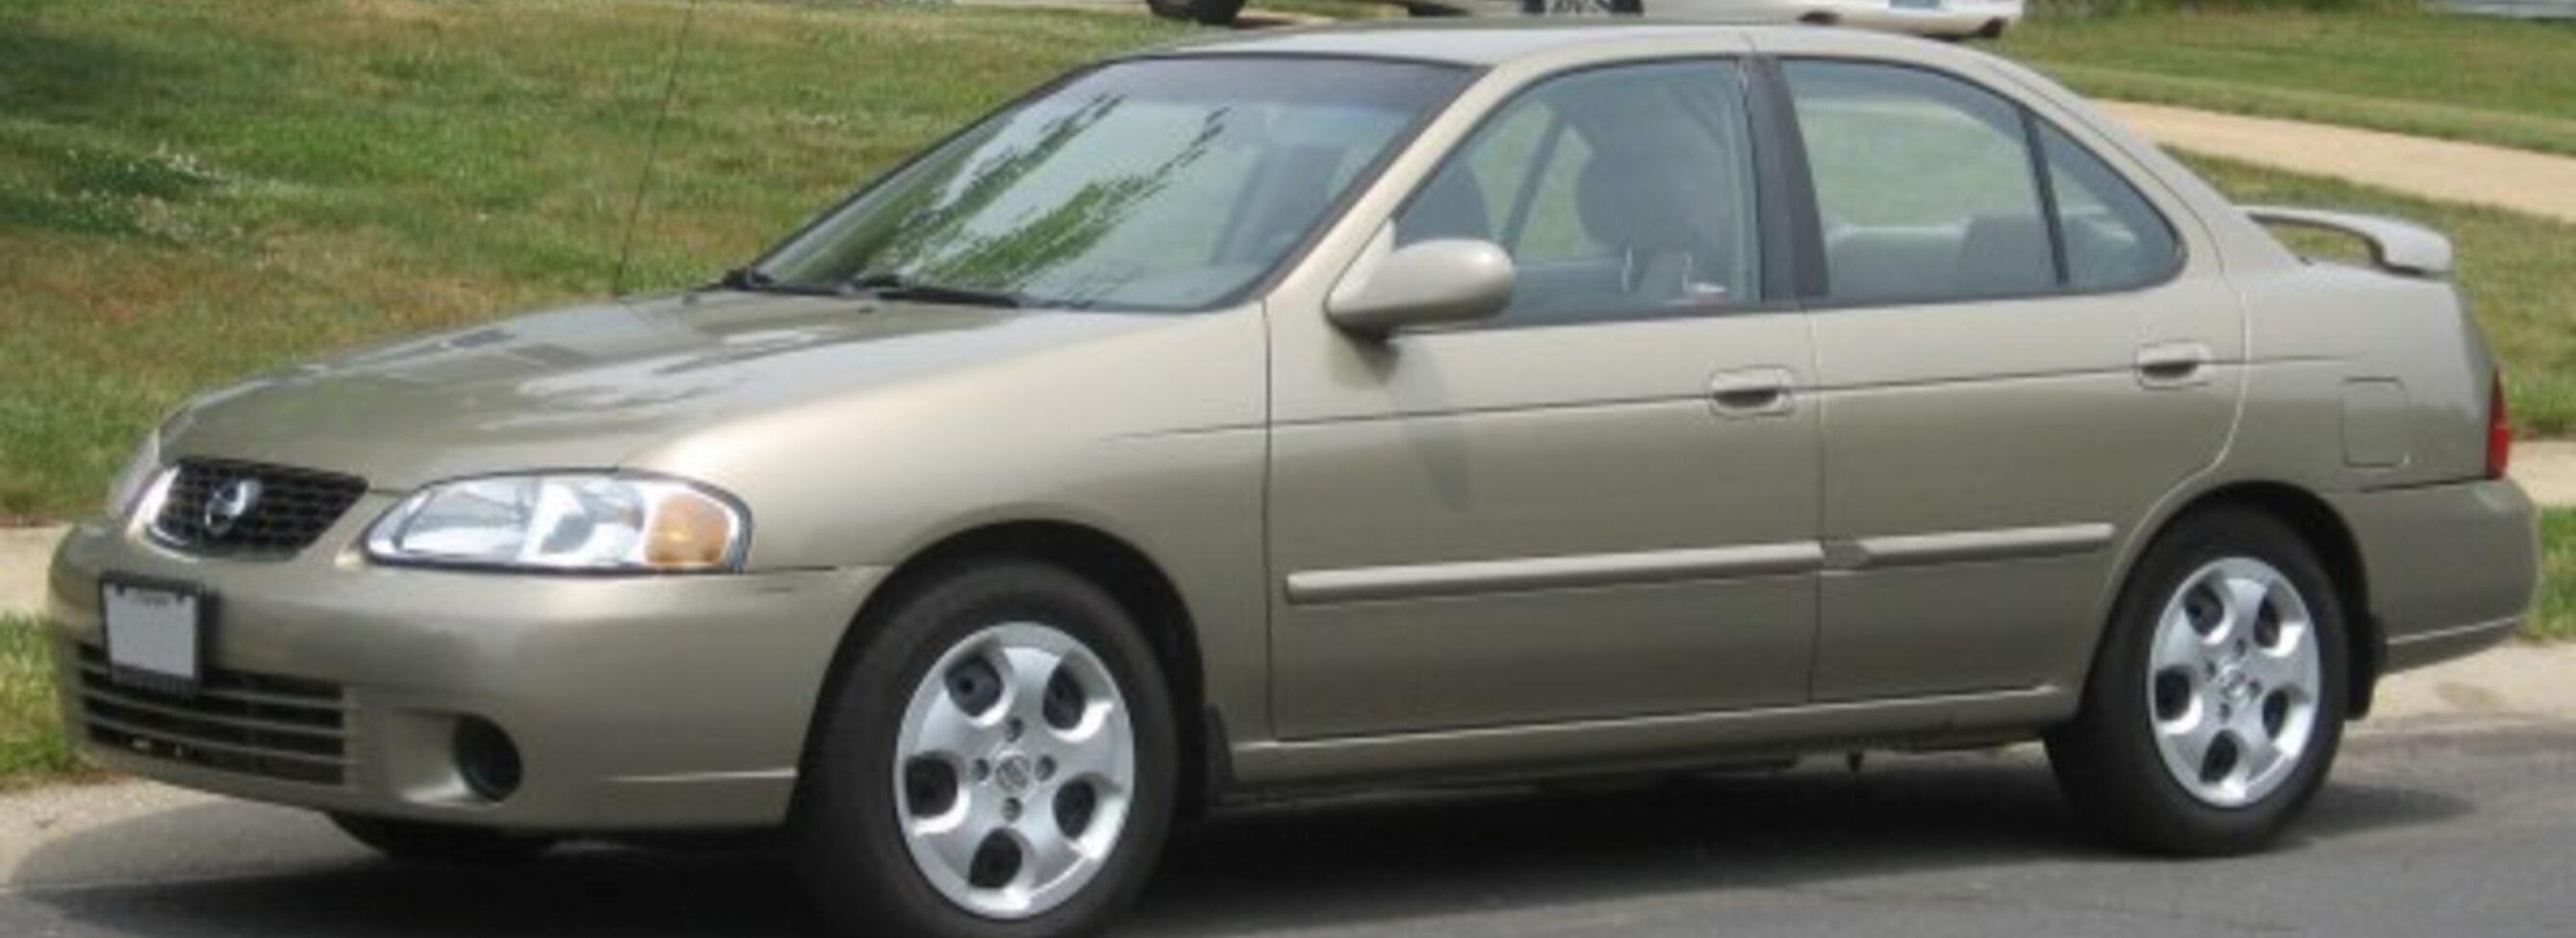 Nissan Sentra (B15) 1.8 i 16V XE (127 Hp) 2000, 2001, 2002, 2003, 2004, 2005, 2006 